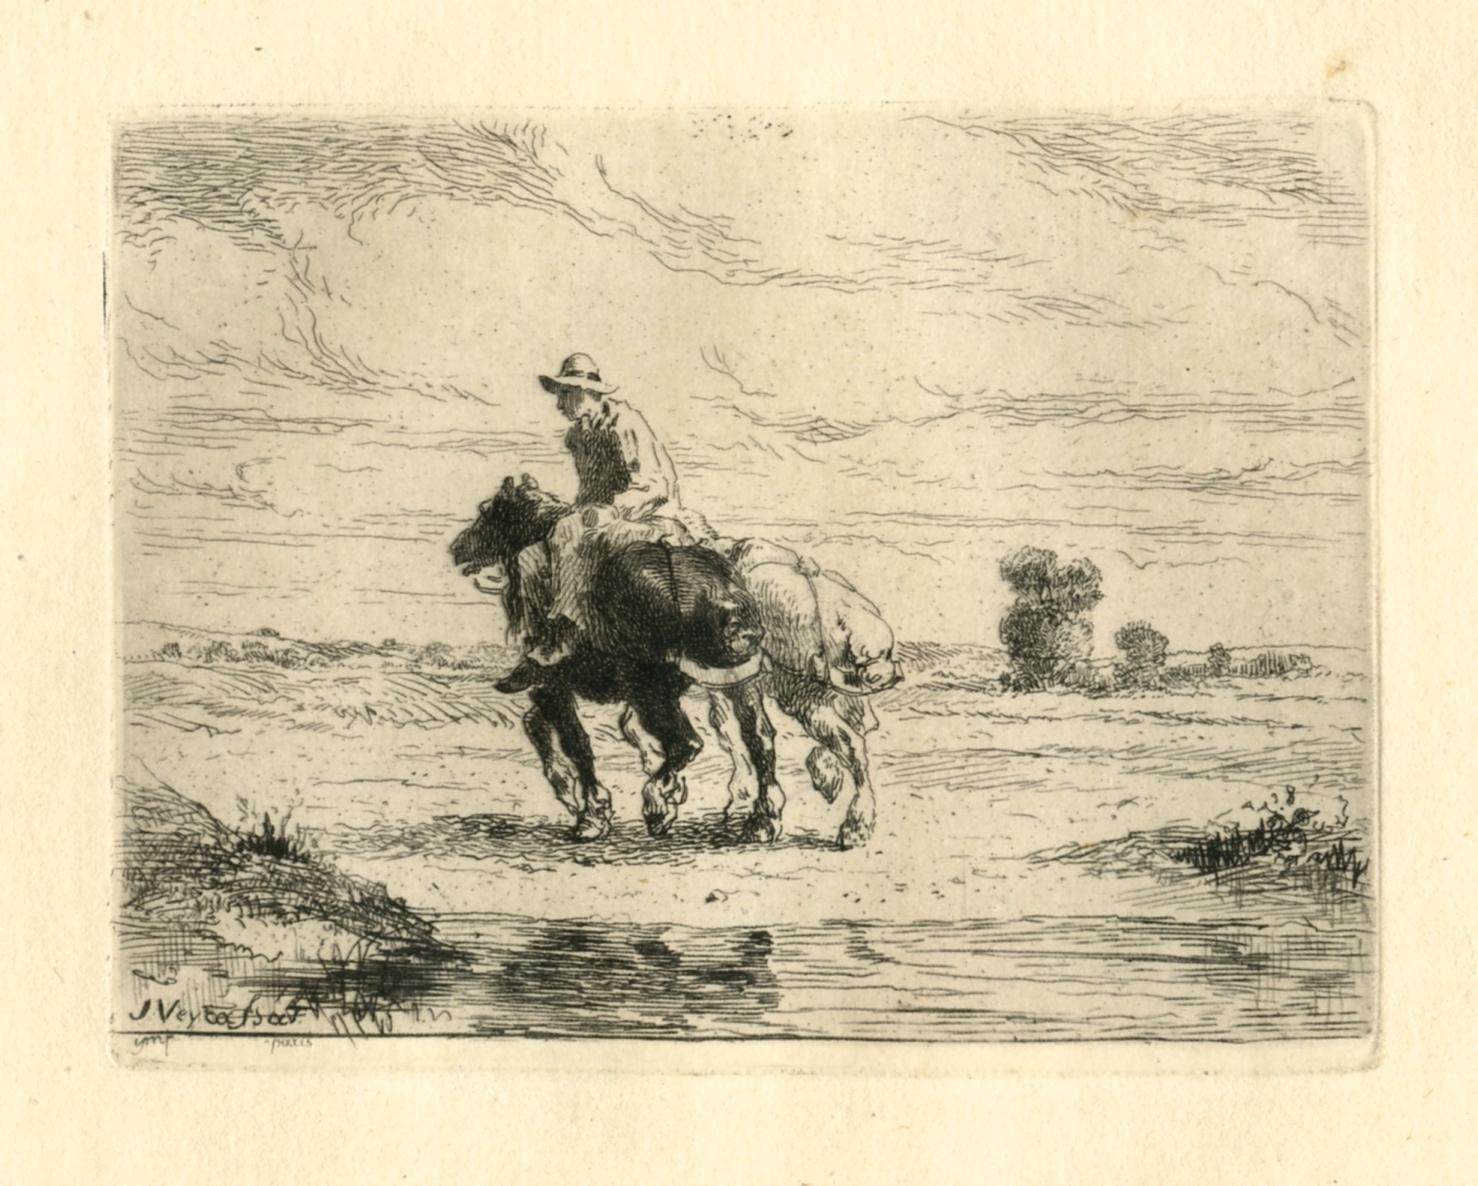 Jules Jacques Veyrassat Landscape Print - "Boat Horses" original etching